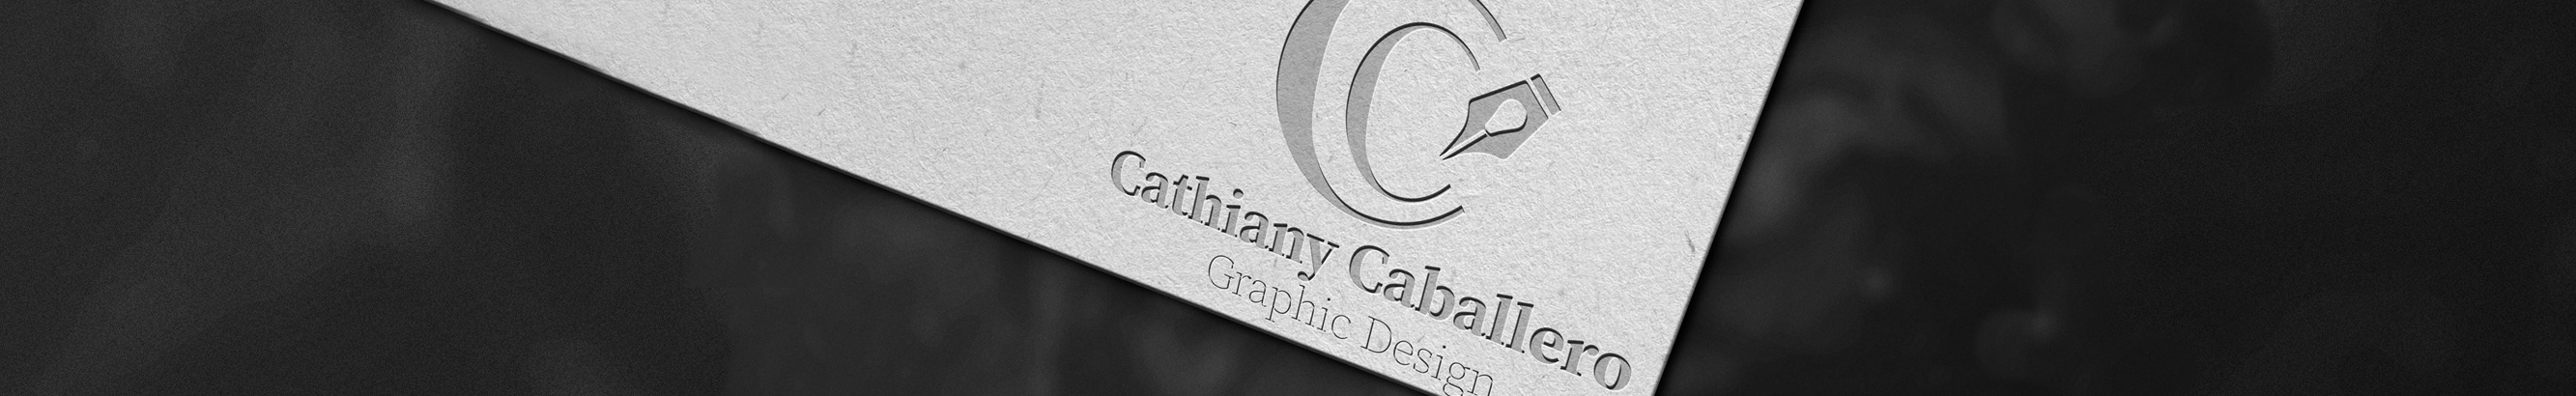 Cathiany Caballero's profile banner